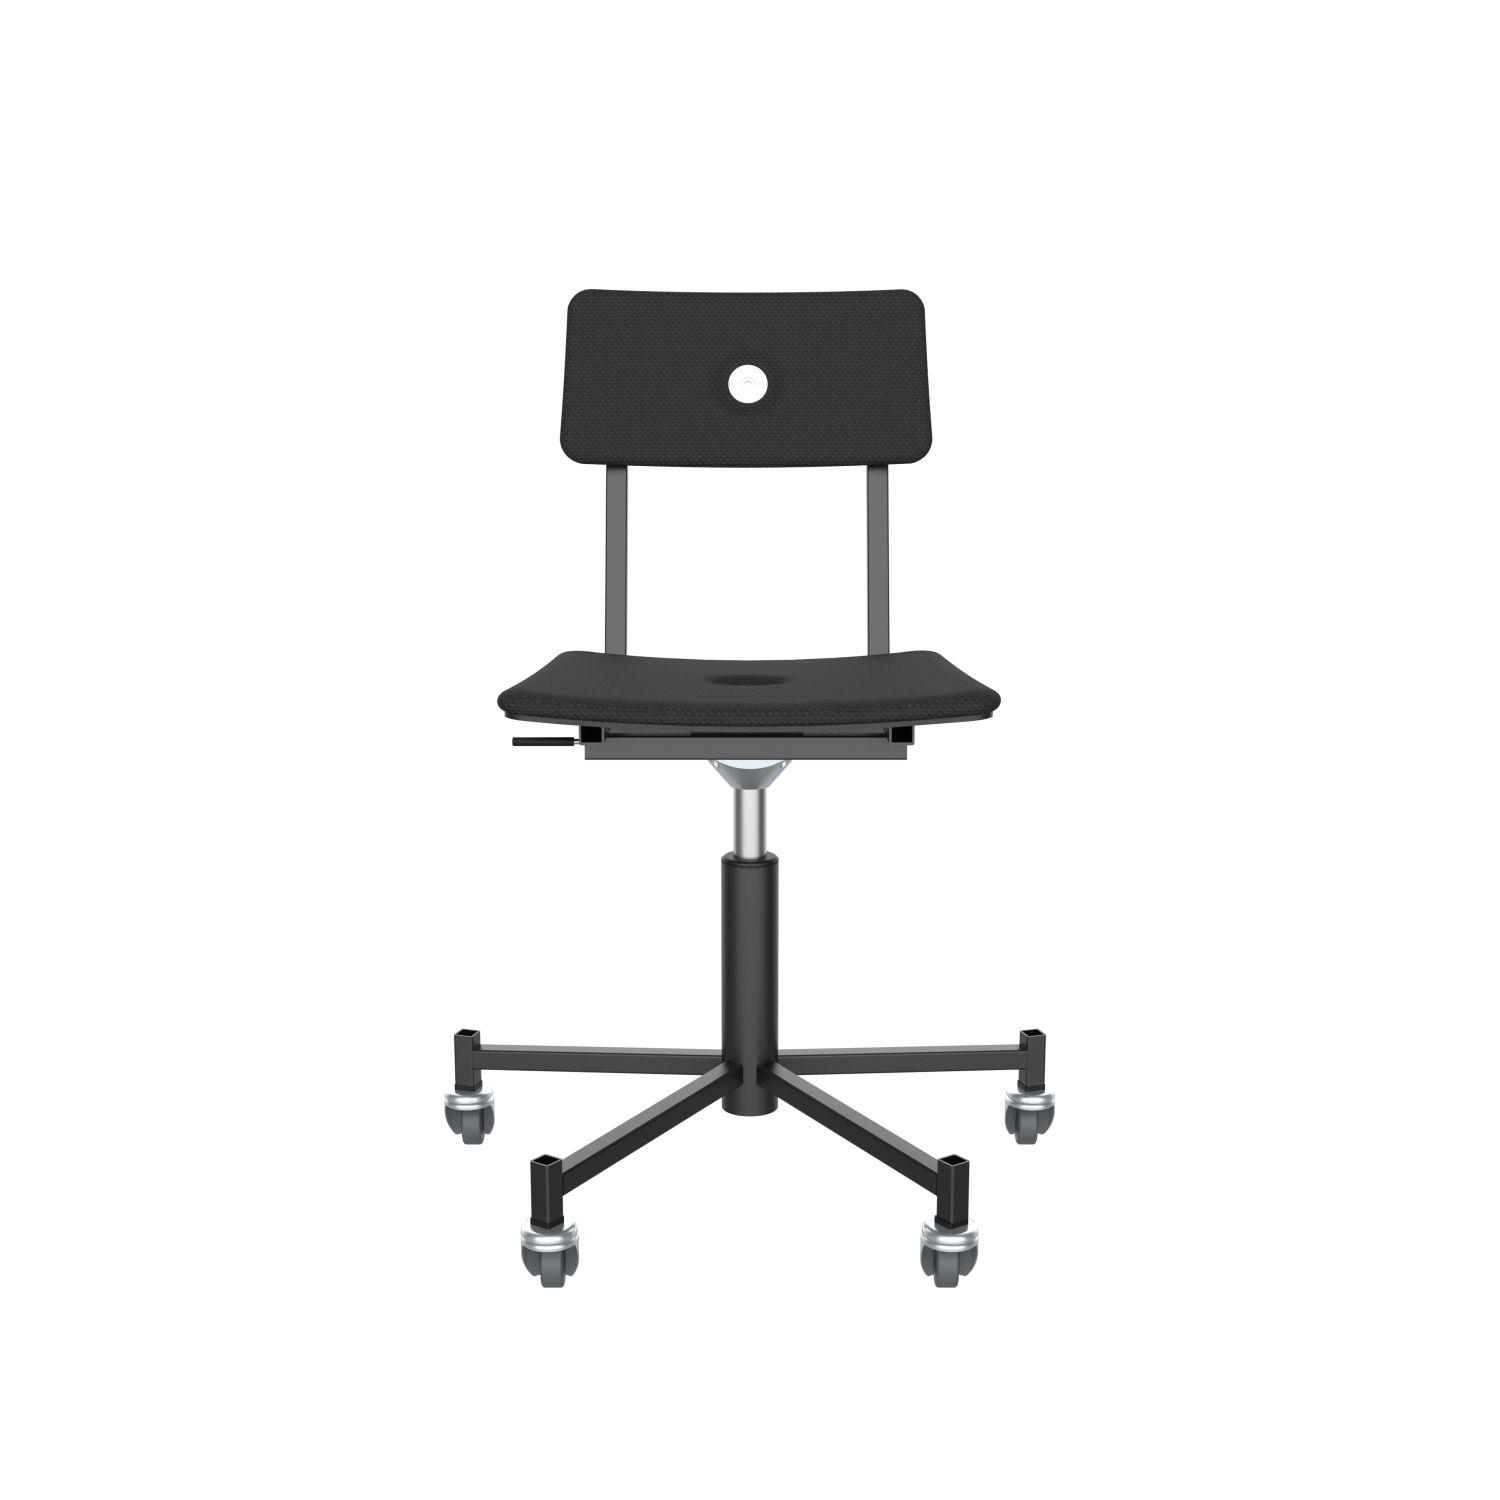 lensvelt piet hein eek mitw upholstered office chair without armrests havana black 090 black ral9005 with wheels